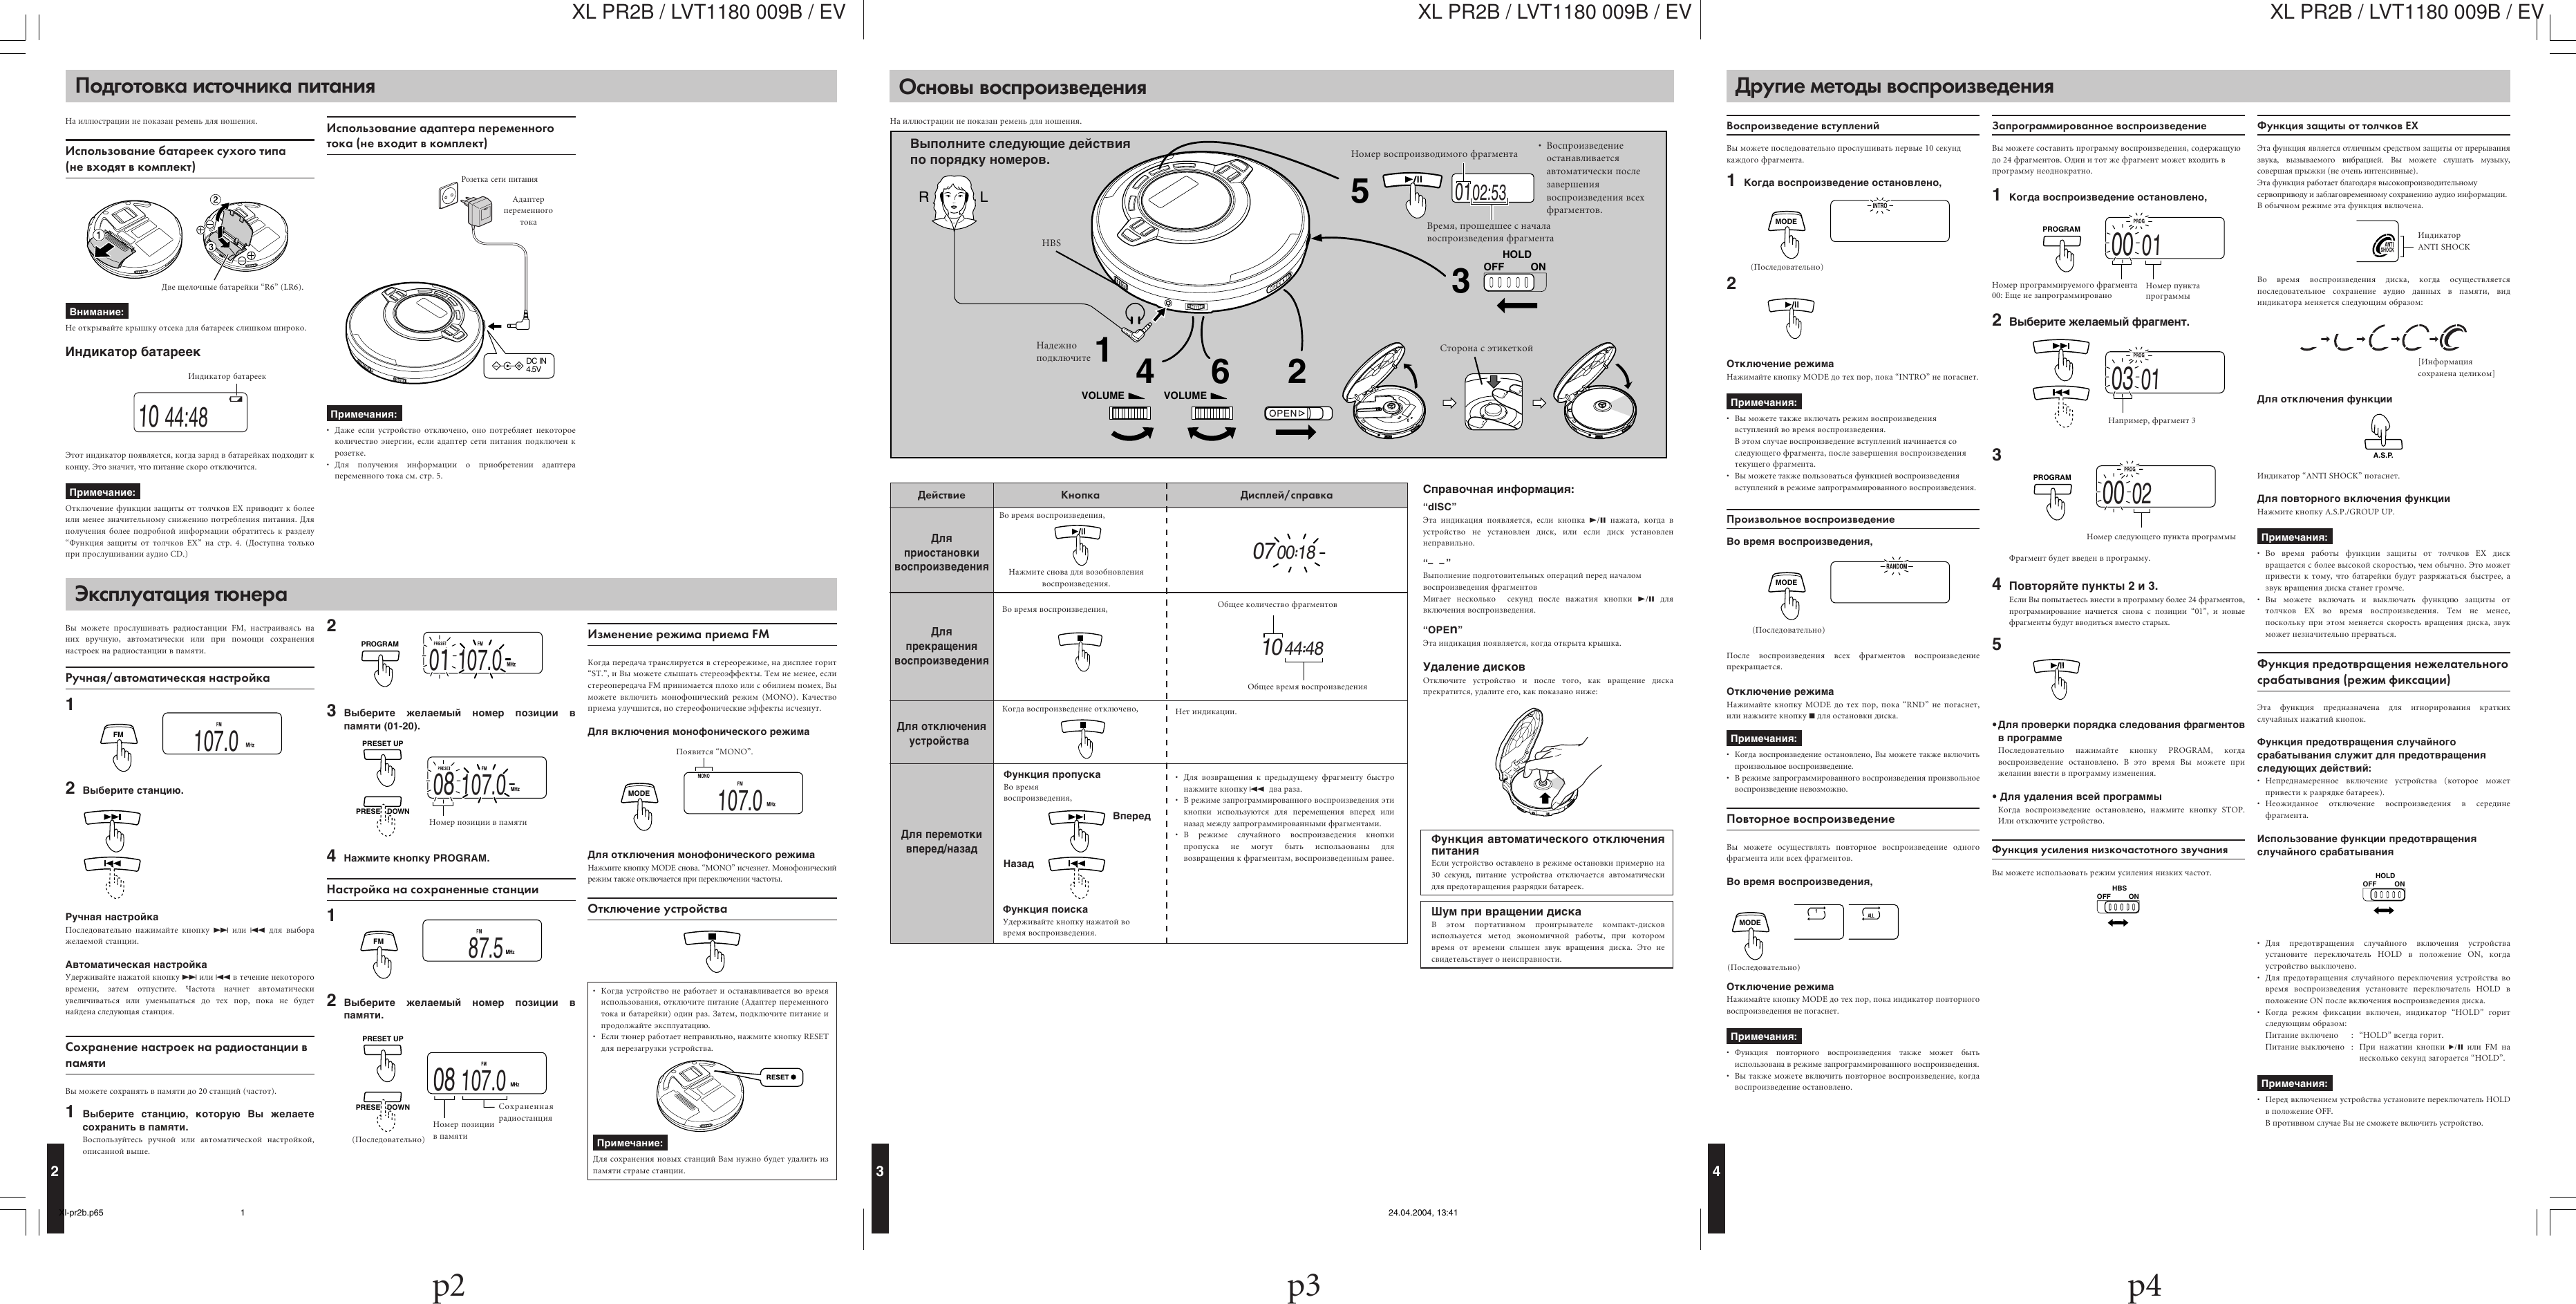 Page 1 of 2 - JVC XL-PR2BEV Xl-pr2b.p65 User Manual LVT1180-009B